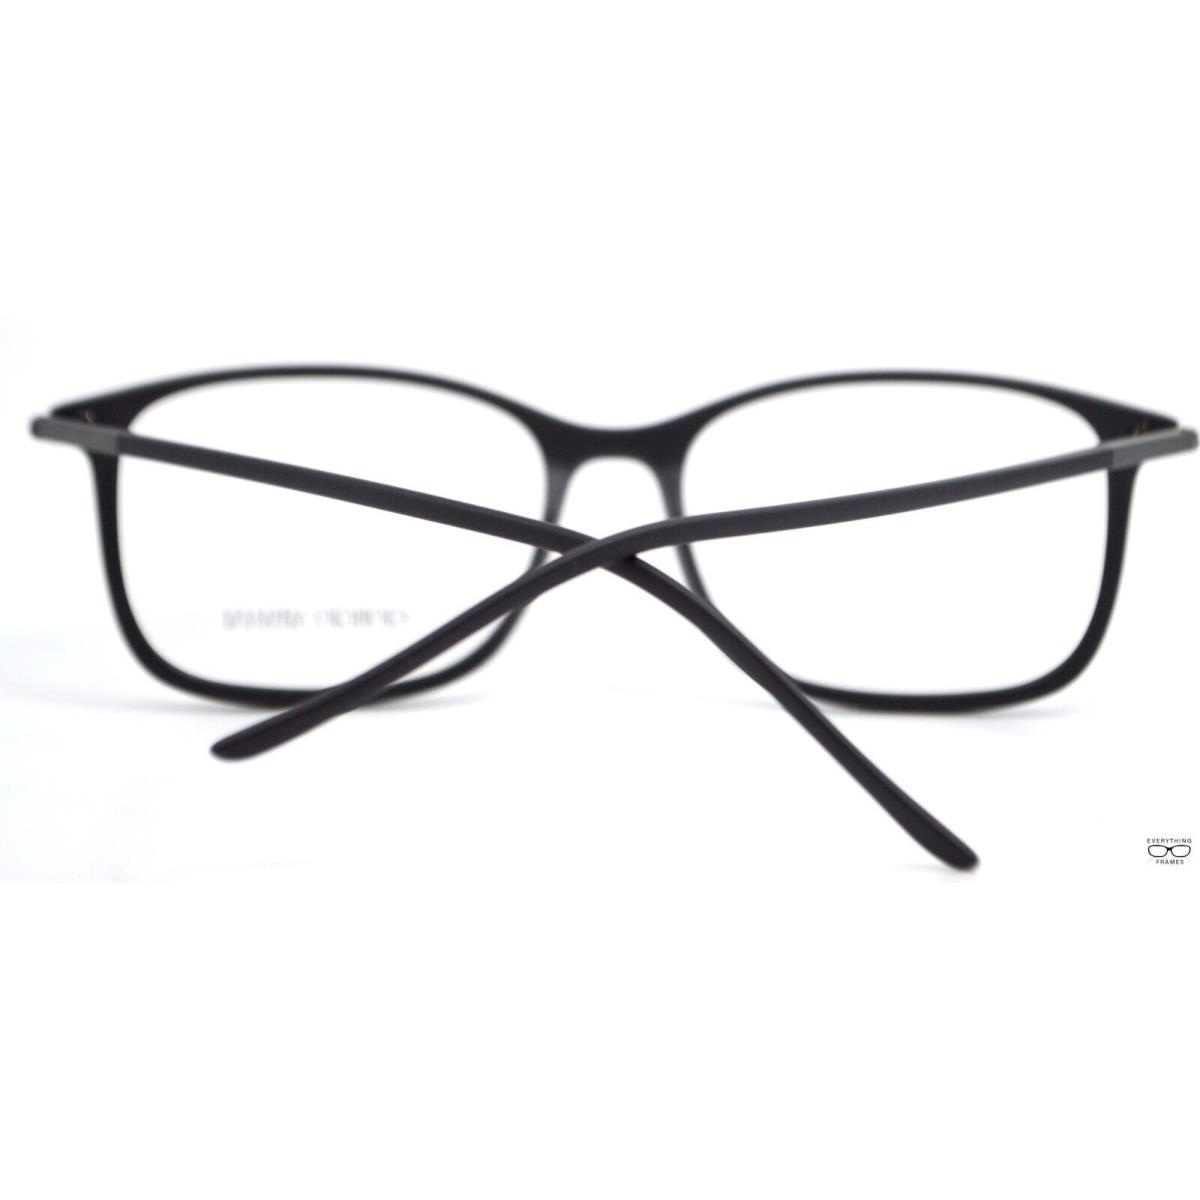 Giorgio Armani eyeglasses  - MATTE GREY WITH RED LOGO Frame 0